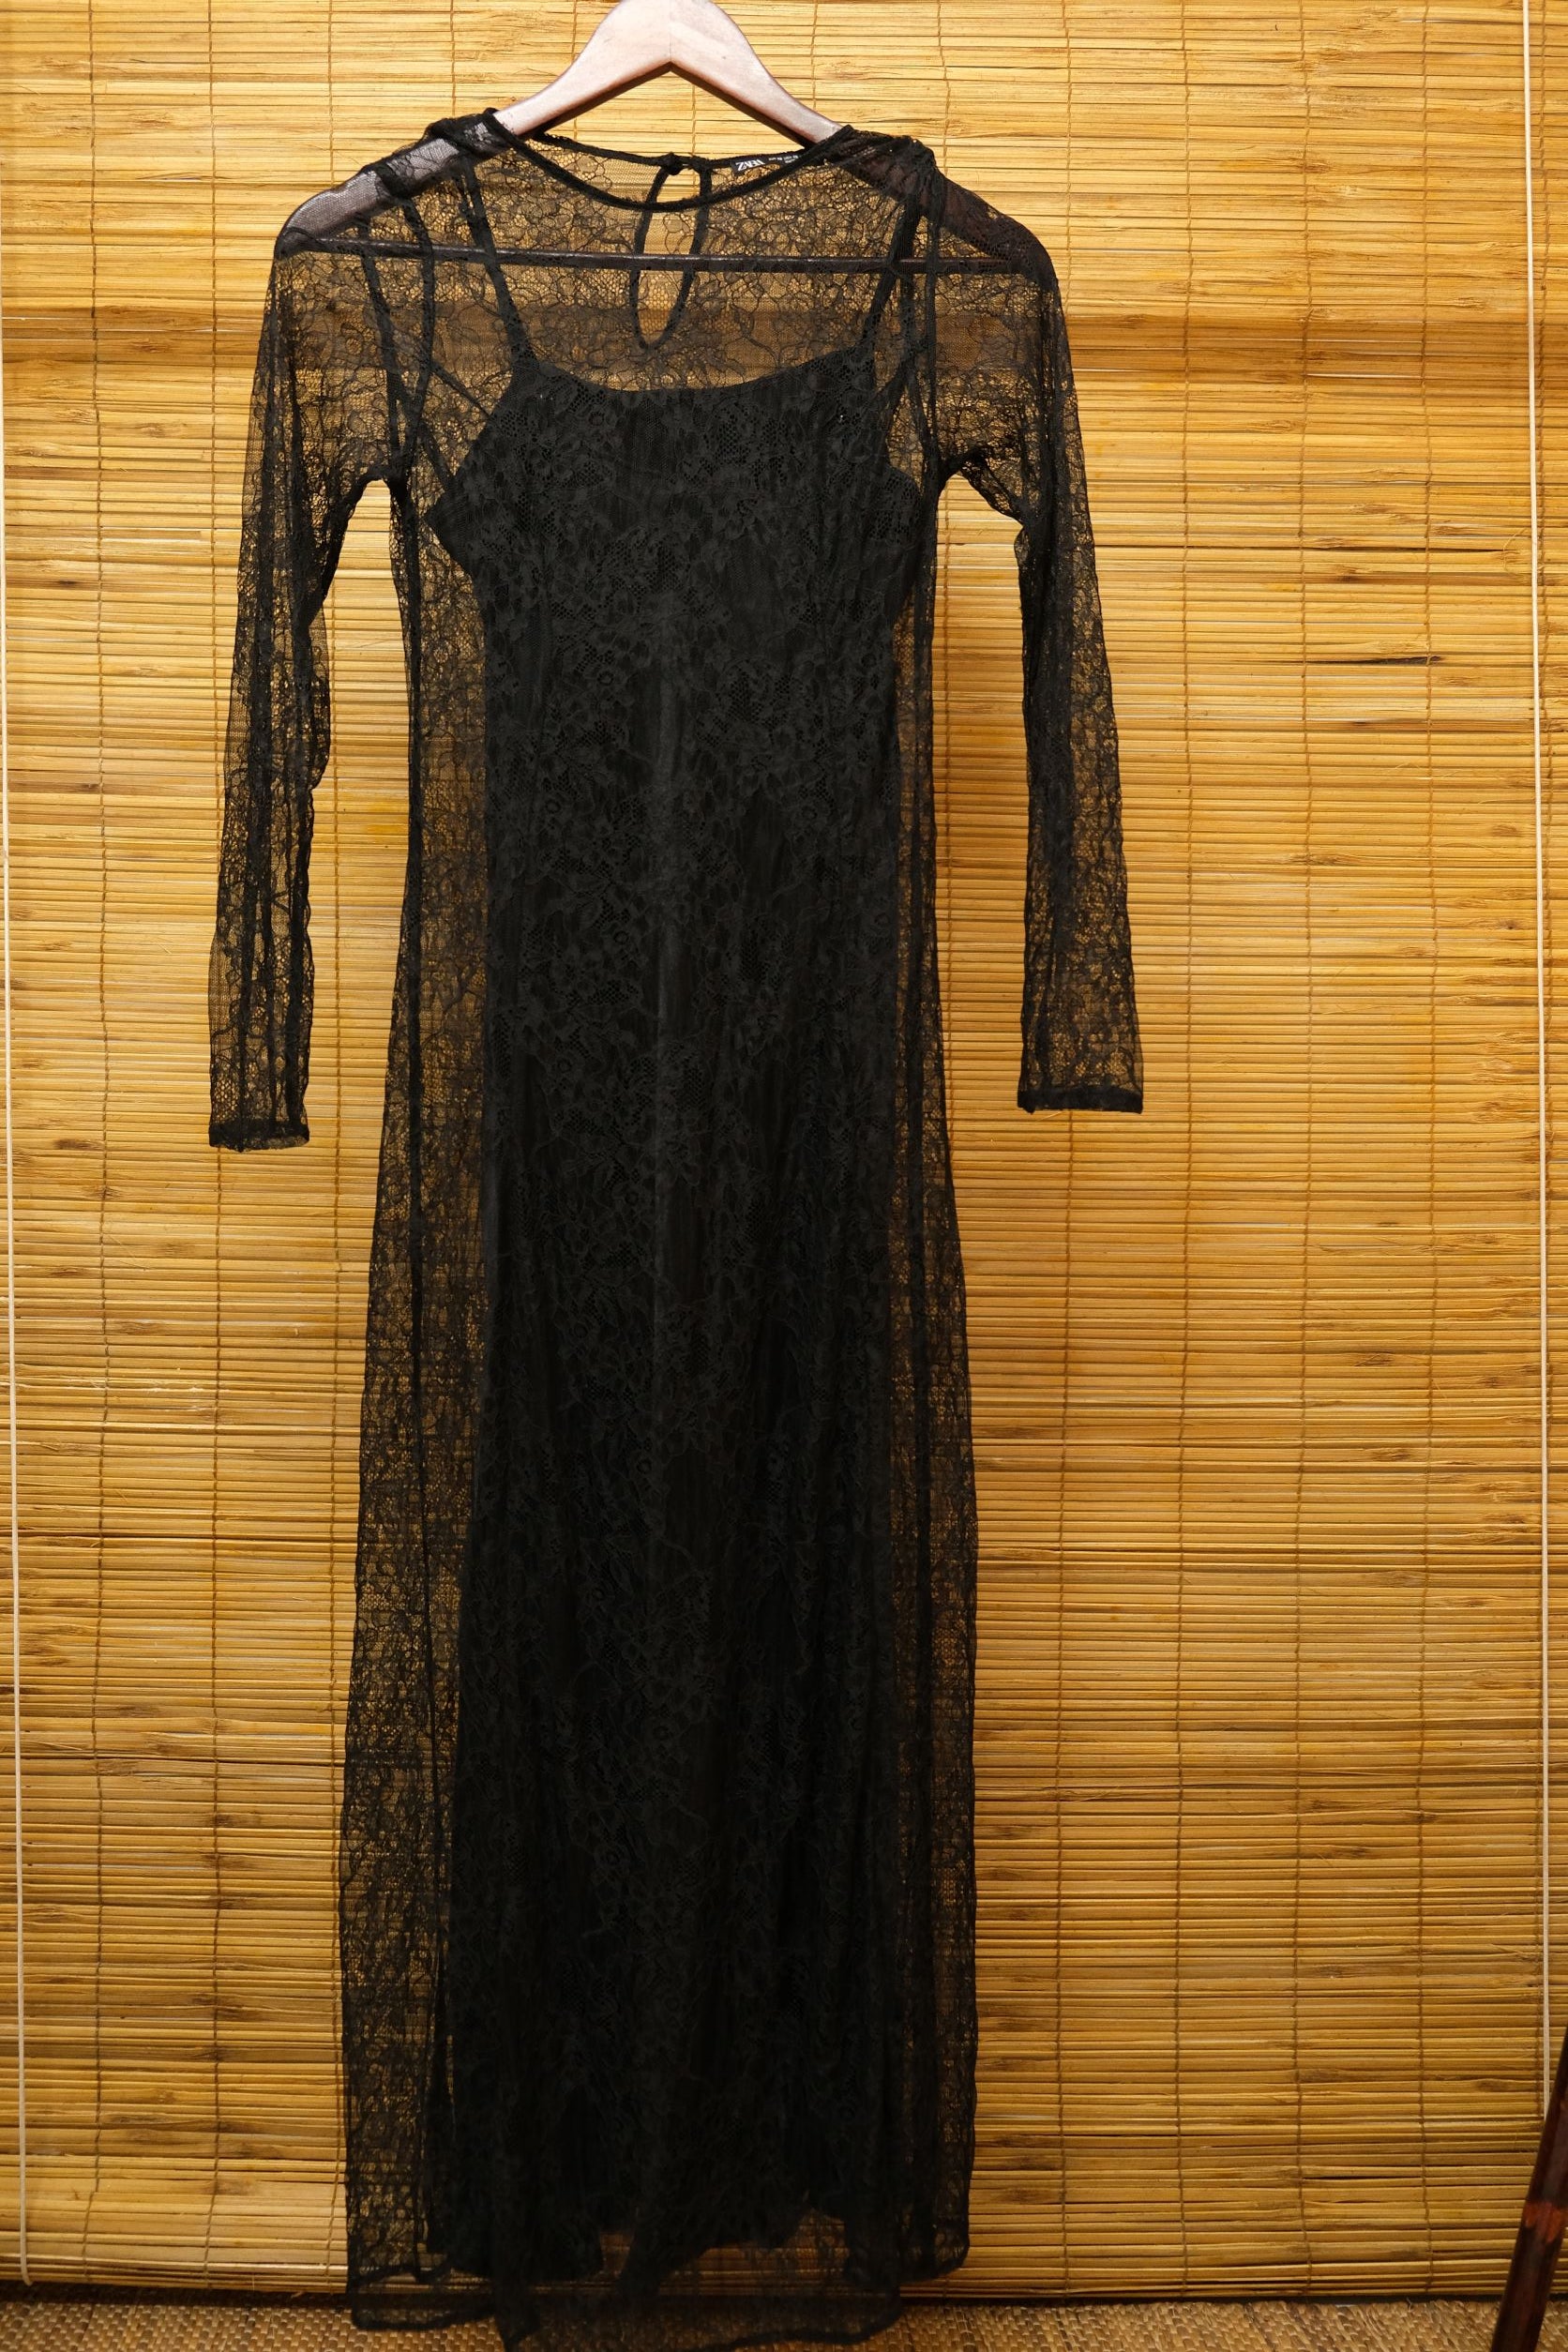 Black Lace Bodycon Dress